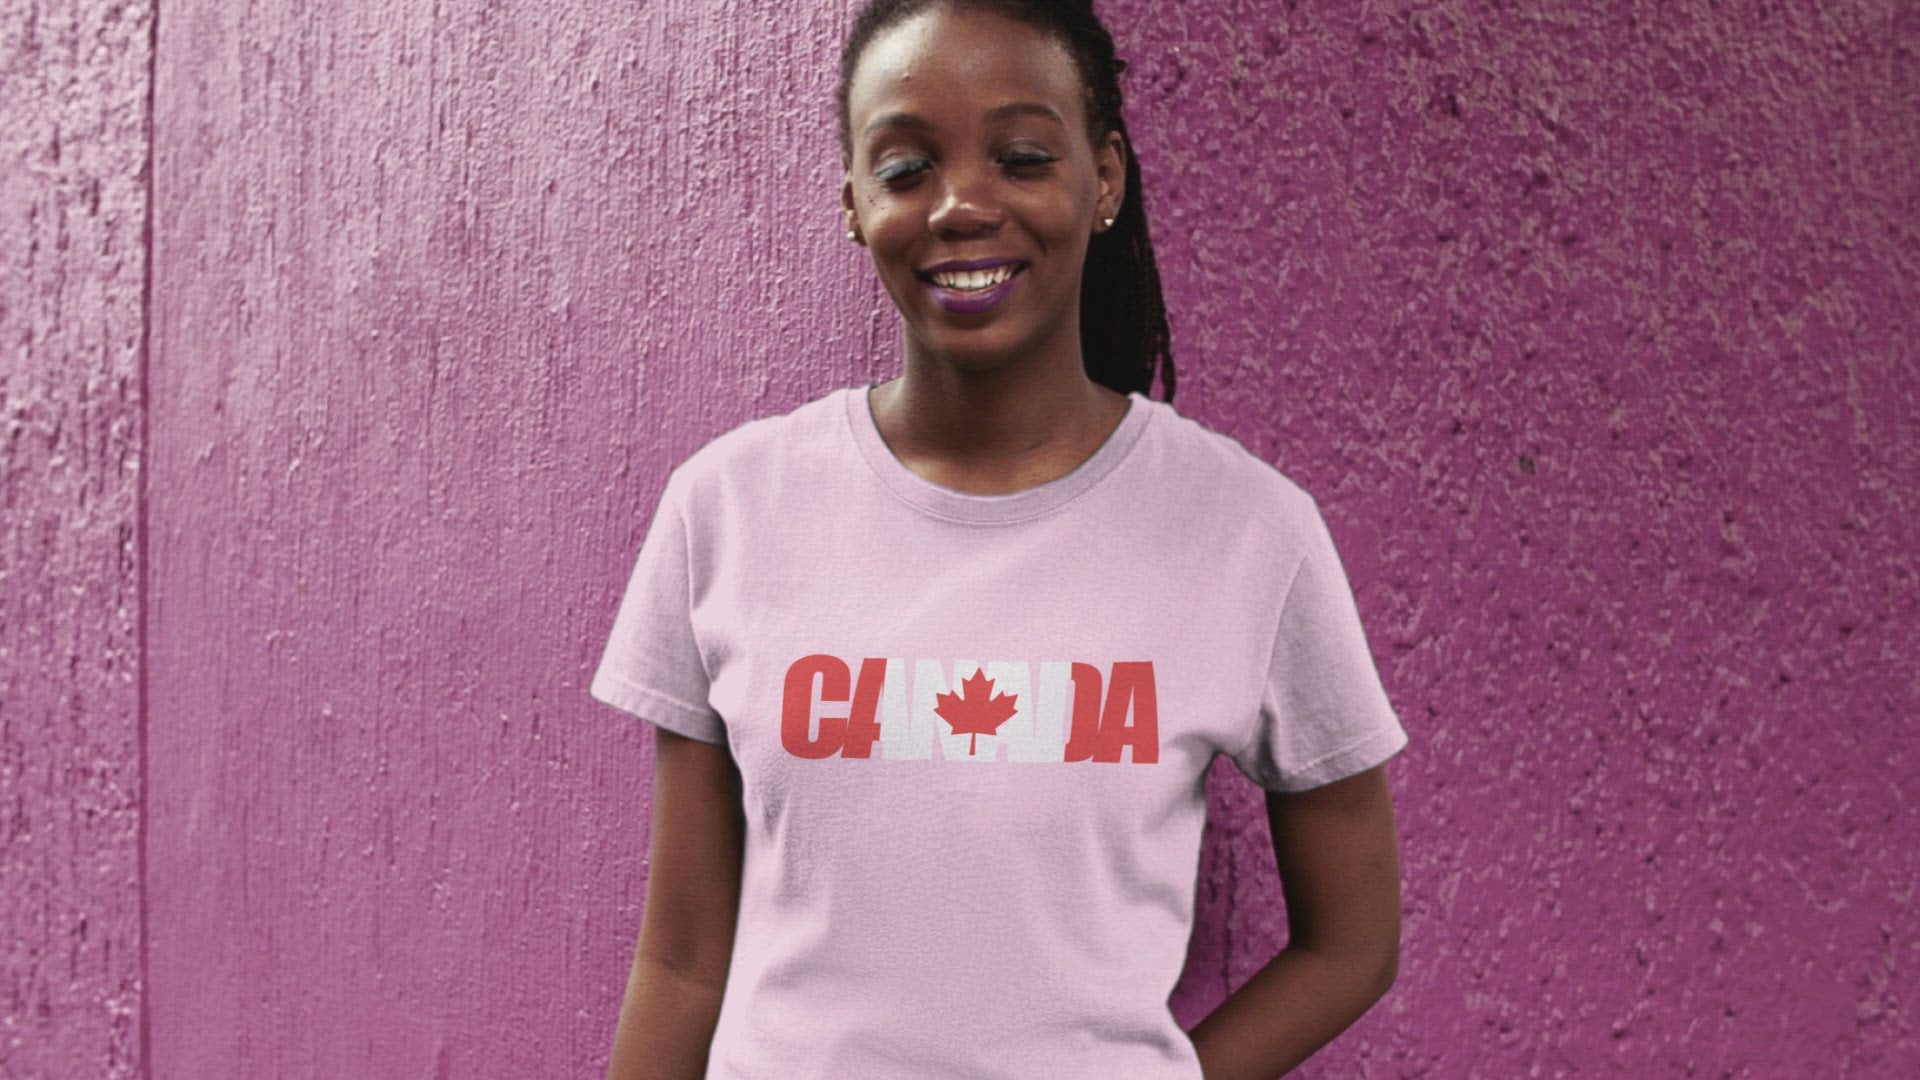 Canada t-shirt in pink - Purple LadyBug Decor